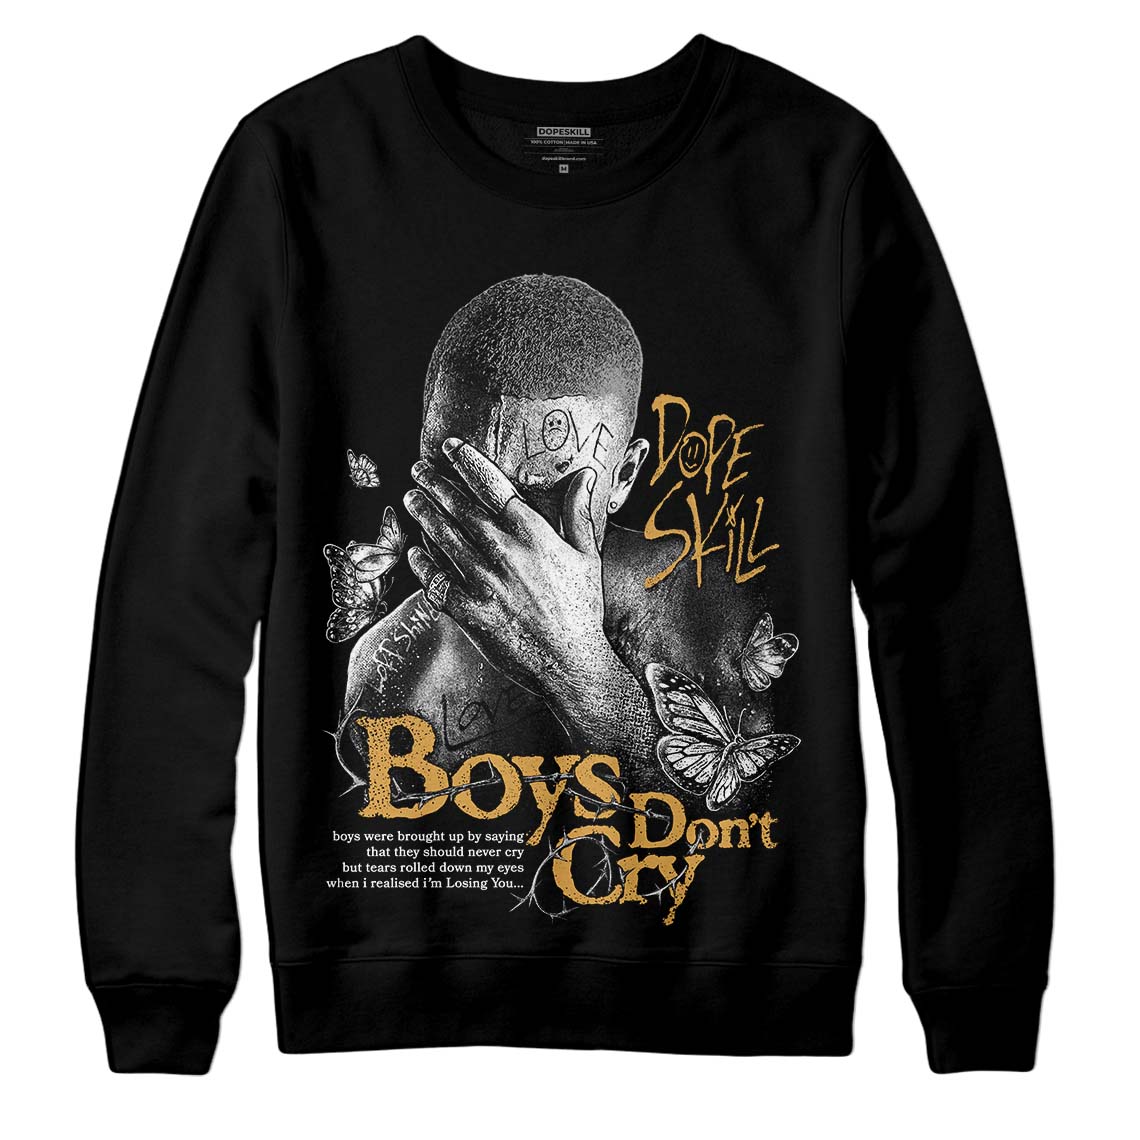 Jordan 11 "Gratitude" DopeSkill Sweatshirt Boys Don't Cry Graphic Streetwear - Black